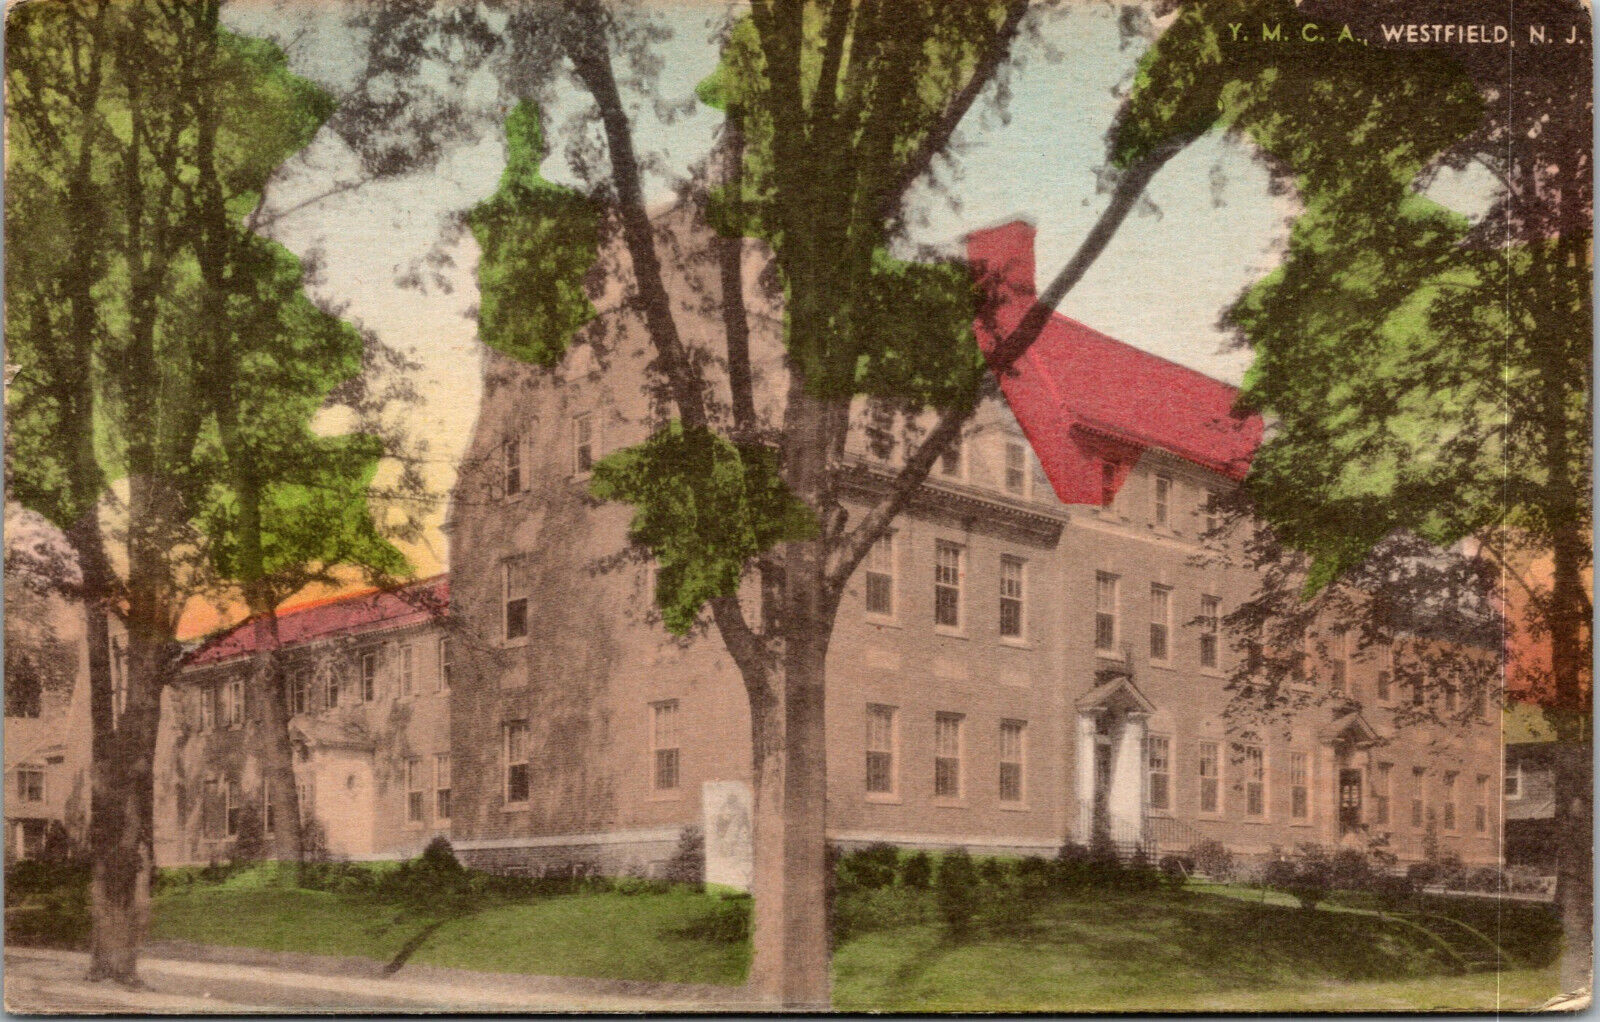 Vtg Westfield New Jersey NJ YMCA Building 1930s Unused Hand Colored Postcard